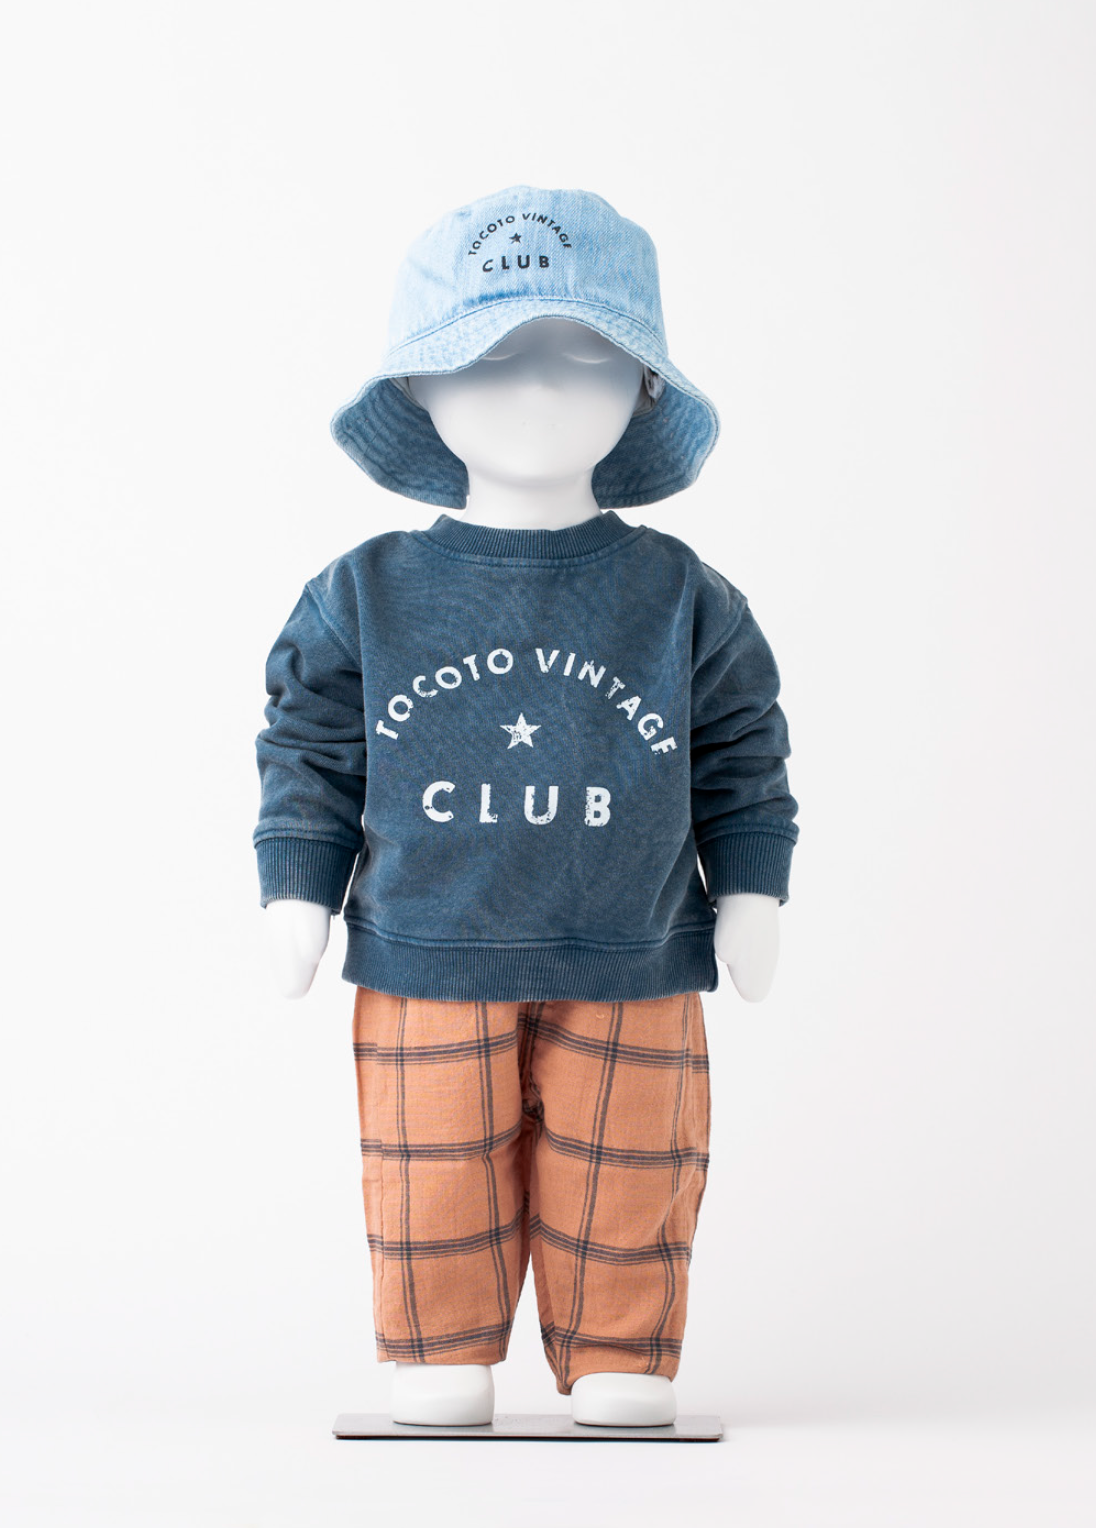 Sweatshirt "TOCOTO VINTAGE CLUB' Blue